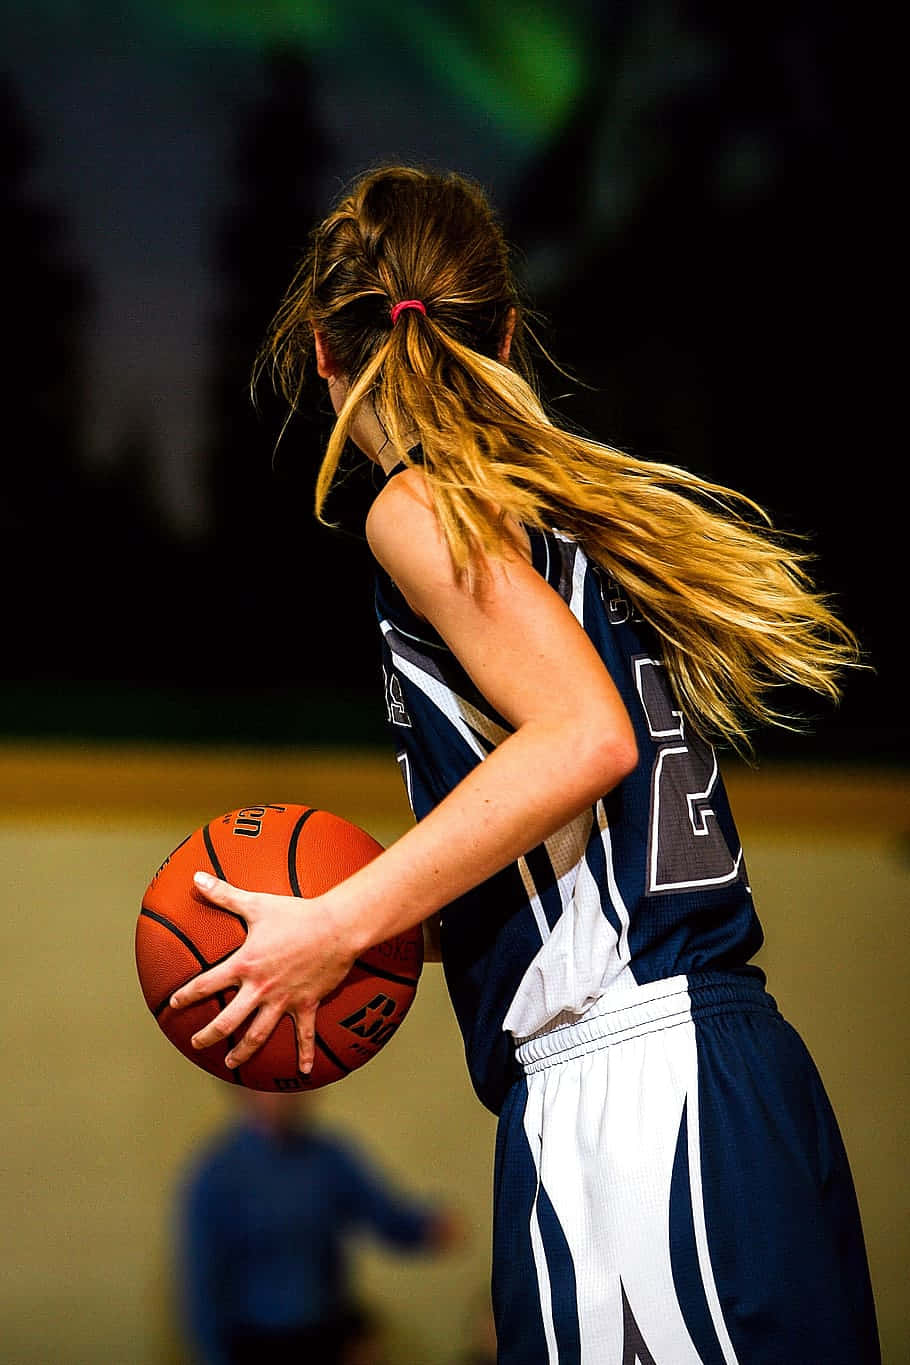 Youth Basketball Player Preparation Wallpaper